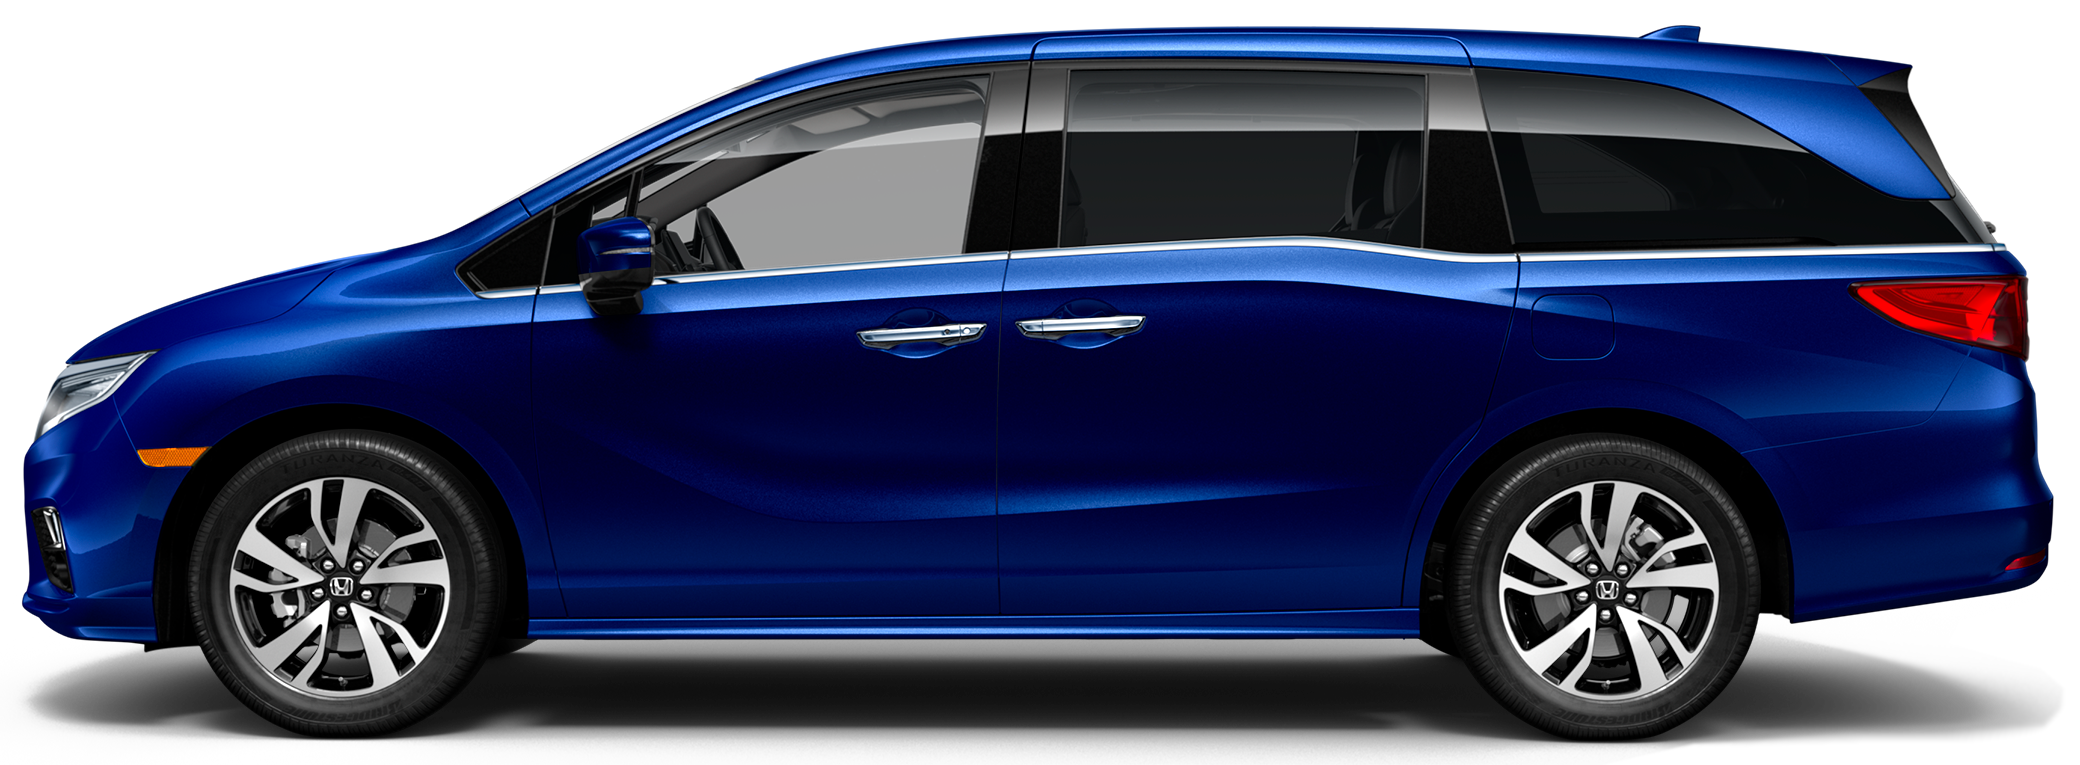 2021 Honda Odyssey Minivan Features 